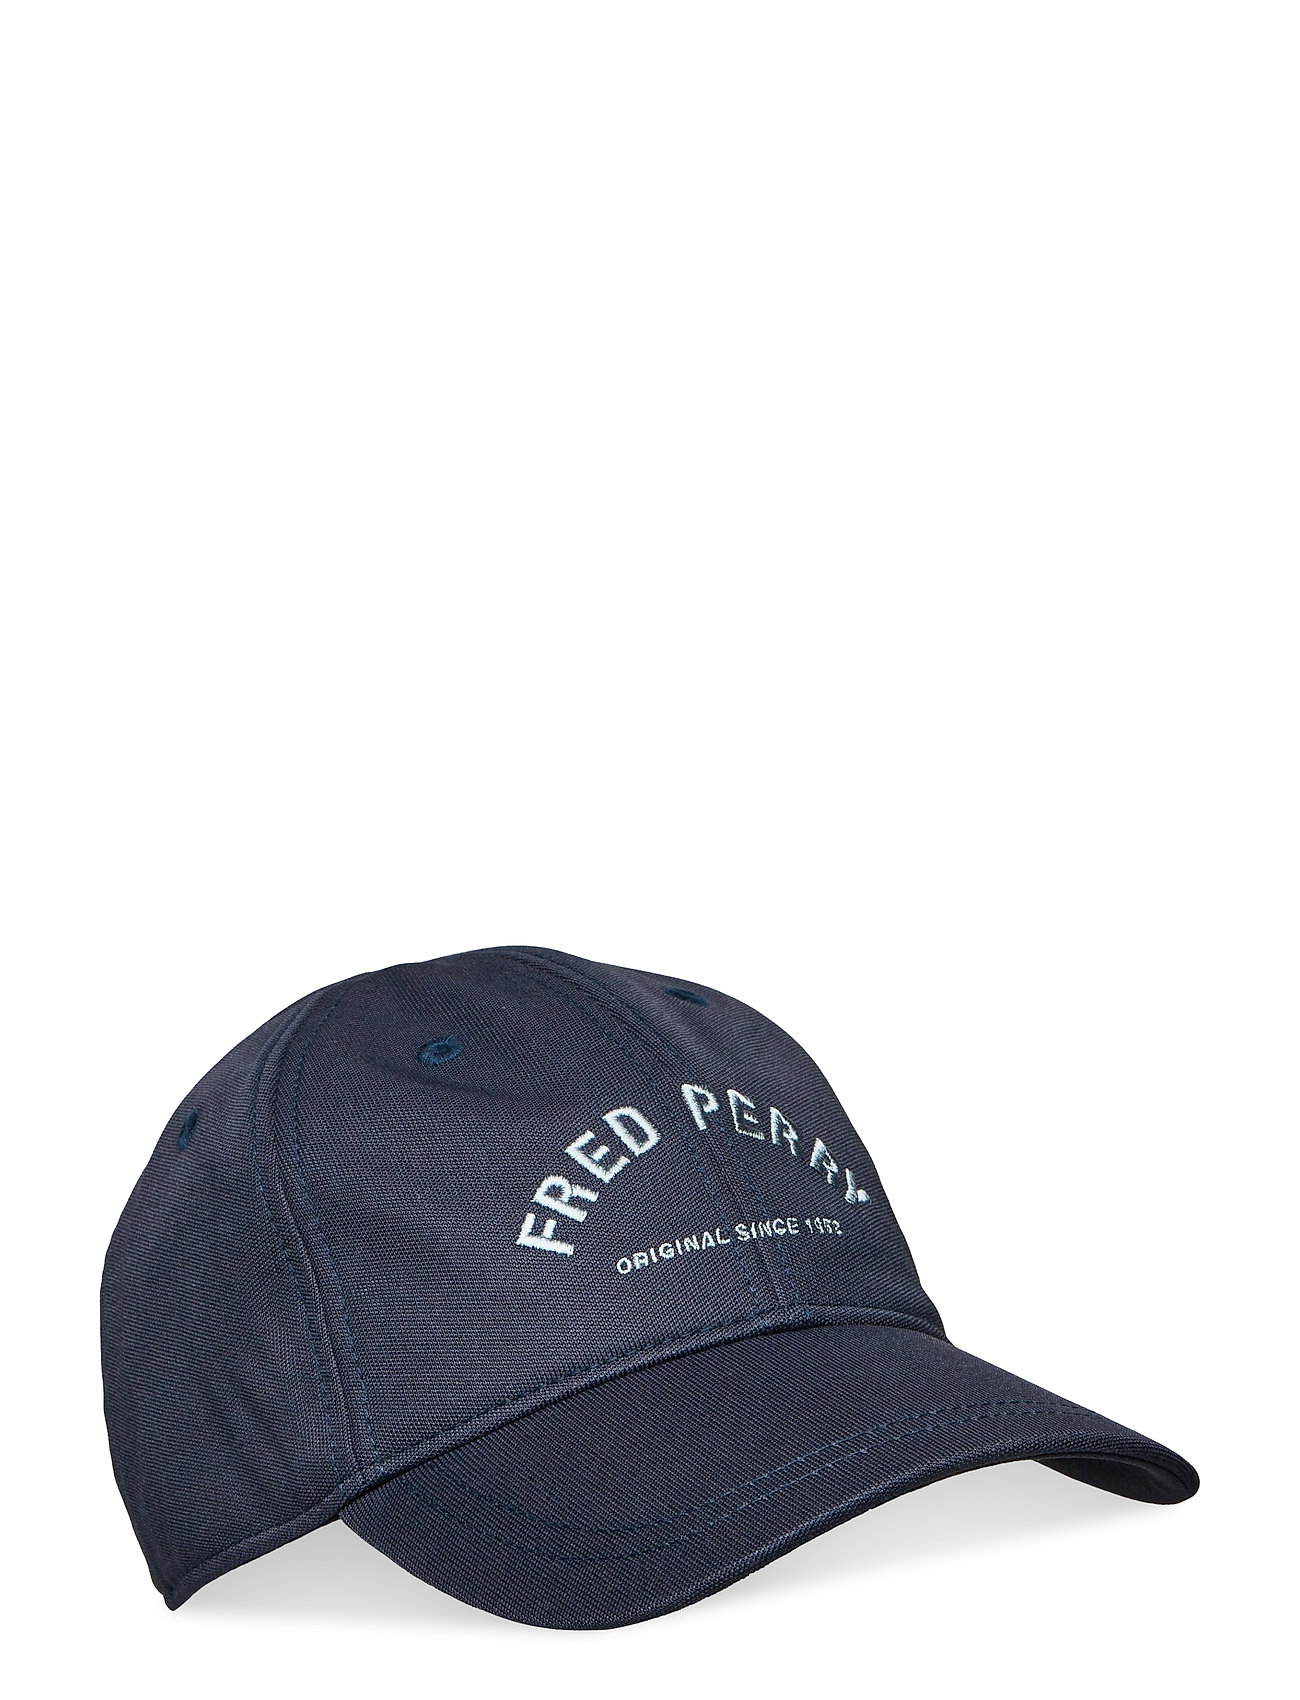 Arch Brand Tricot Cap Accessories Headwear Caps Sininen Fred Perry